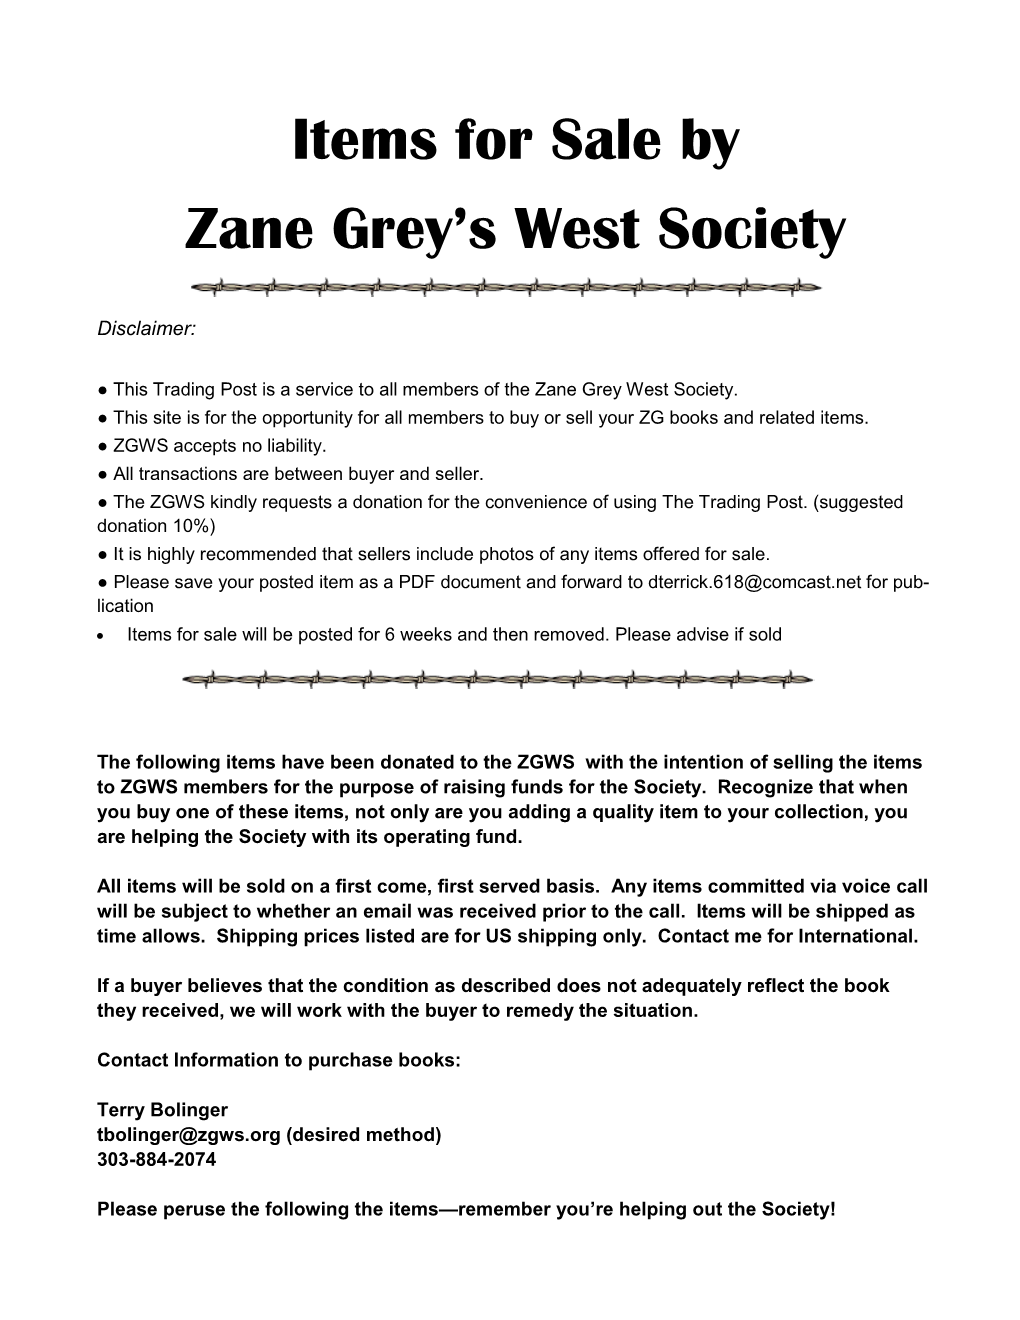 Items for Sale by Zane Grey's West Society